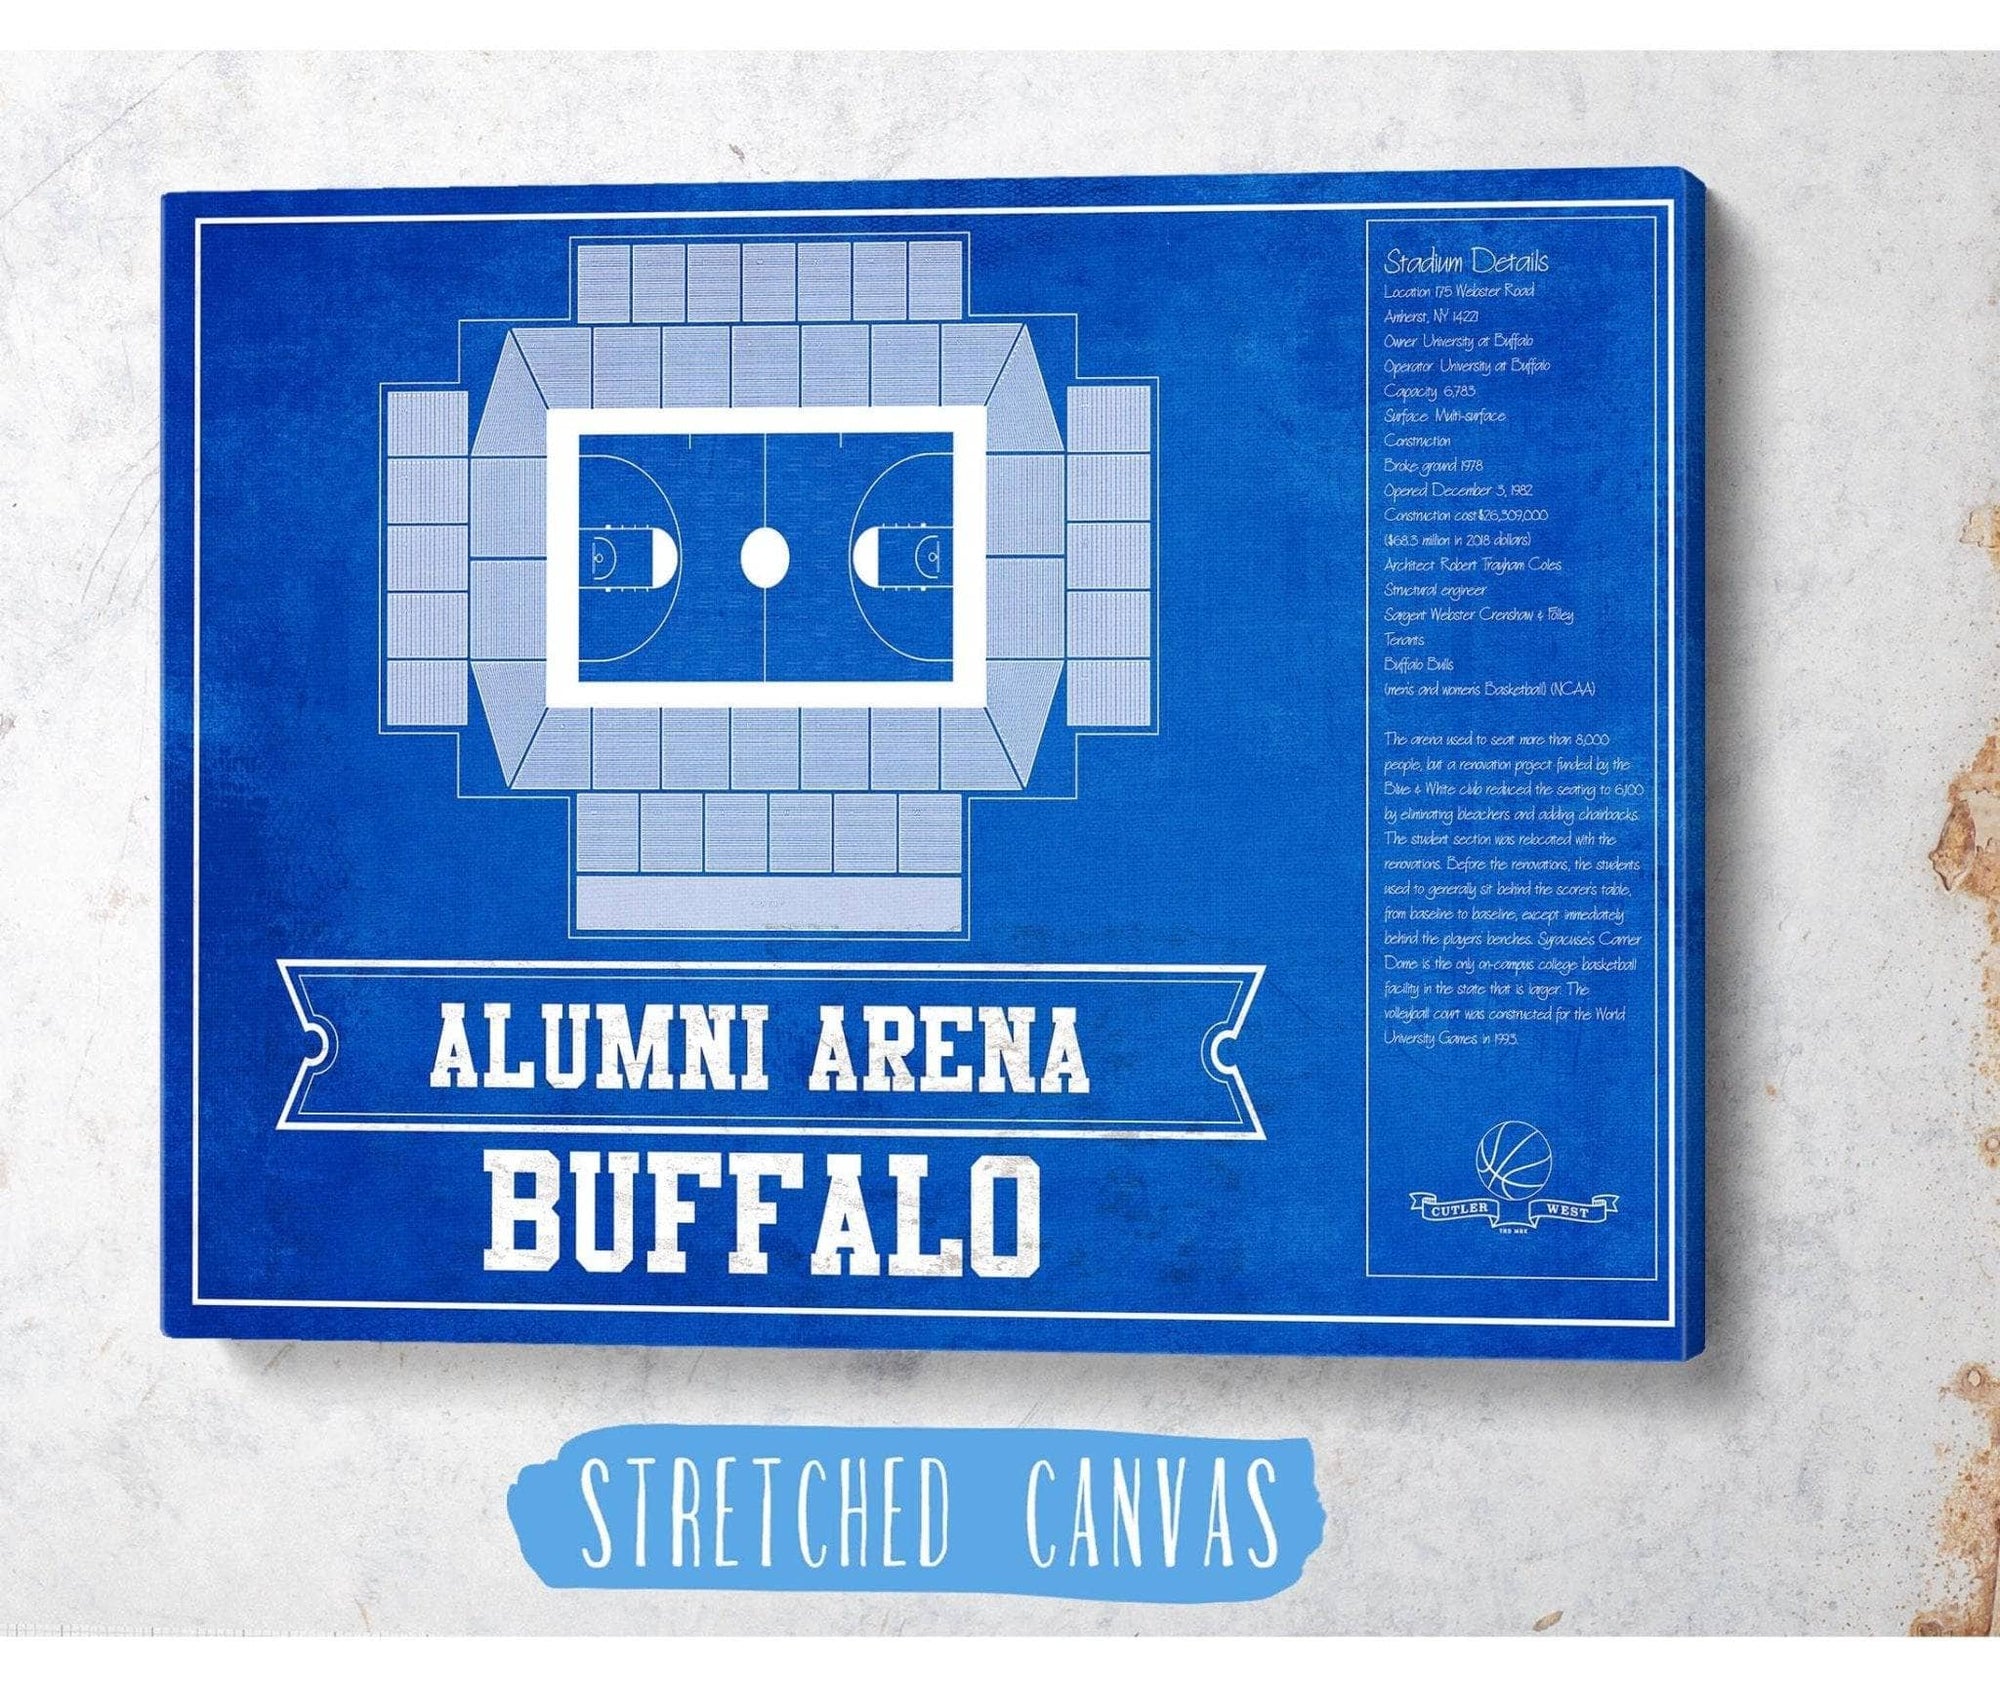 Cutler West Basketball Collection Alumni Arena Buffalo Bulls Team Colors NCAA Vintage Basketball Print